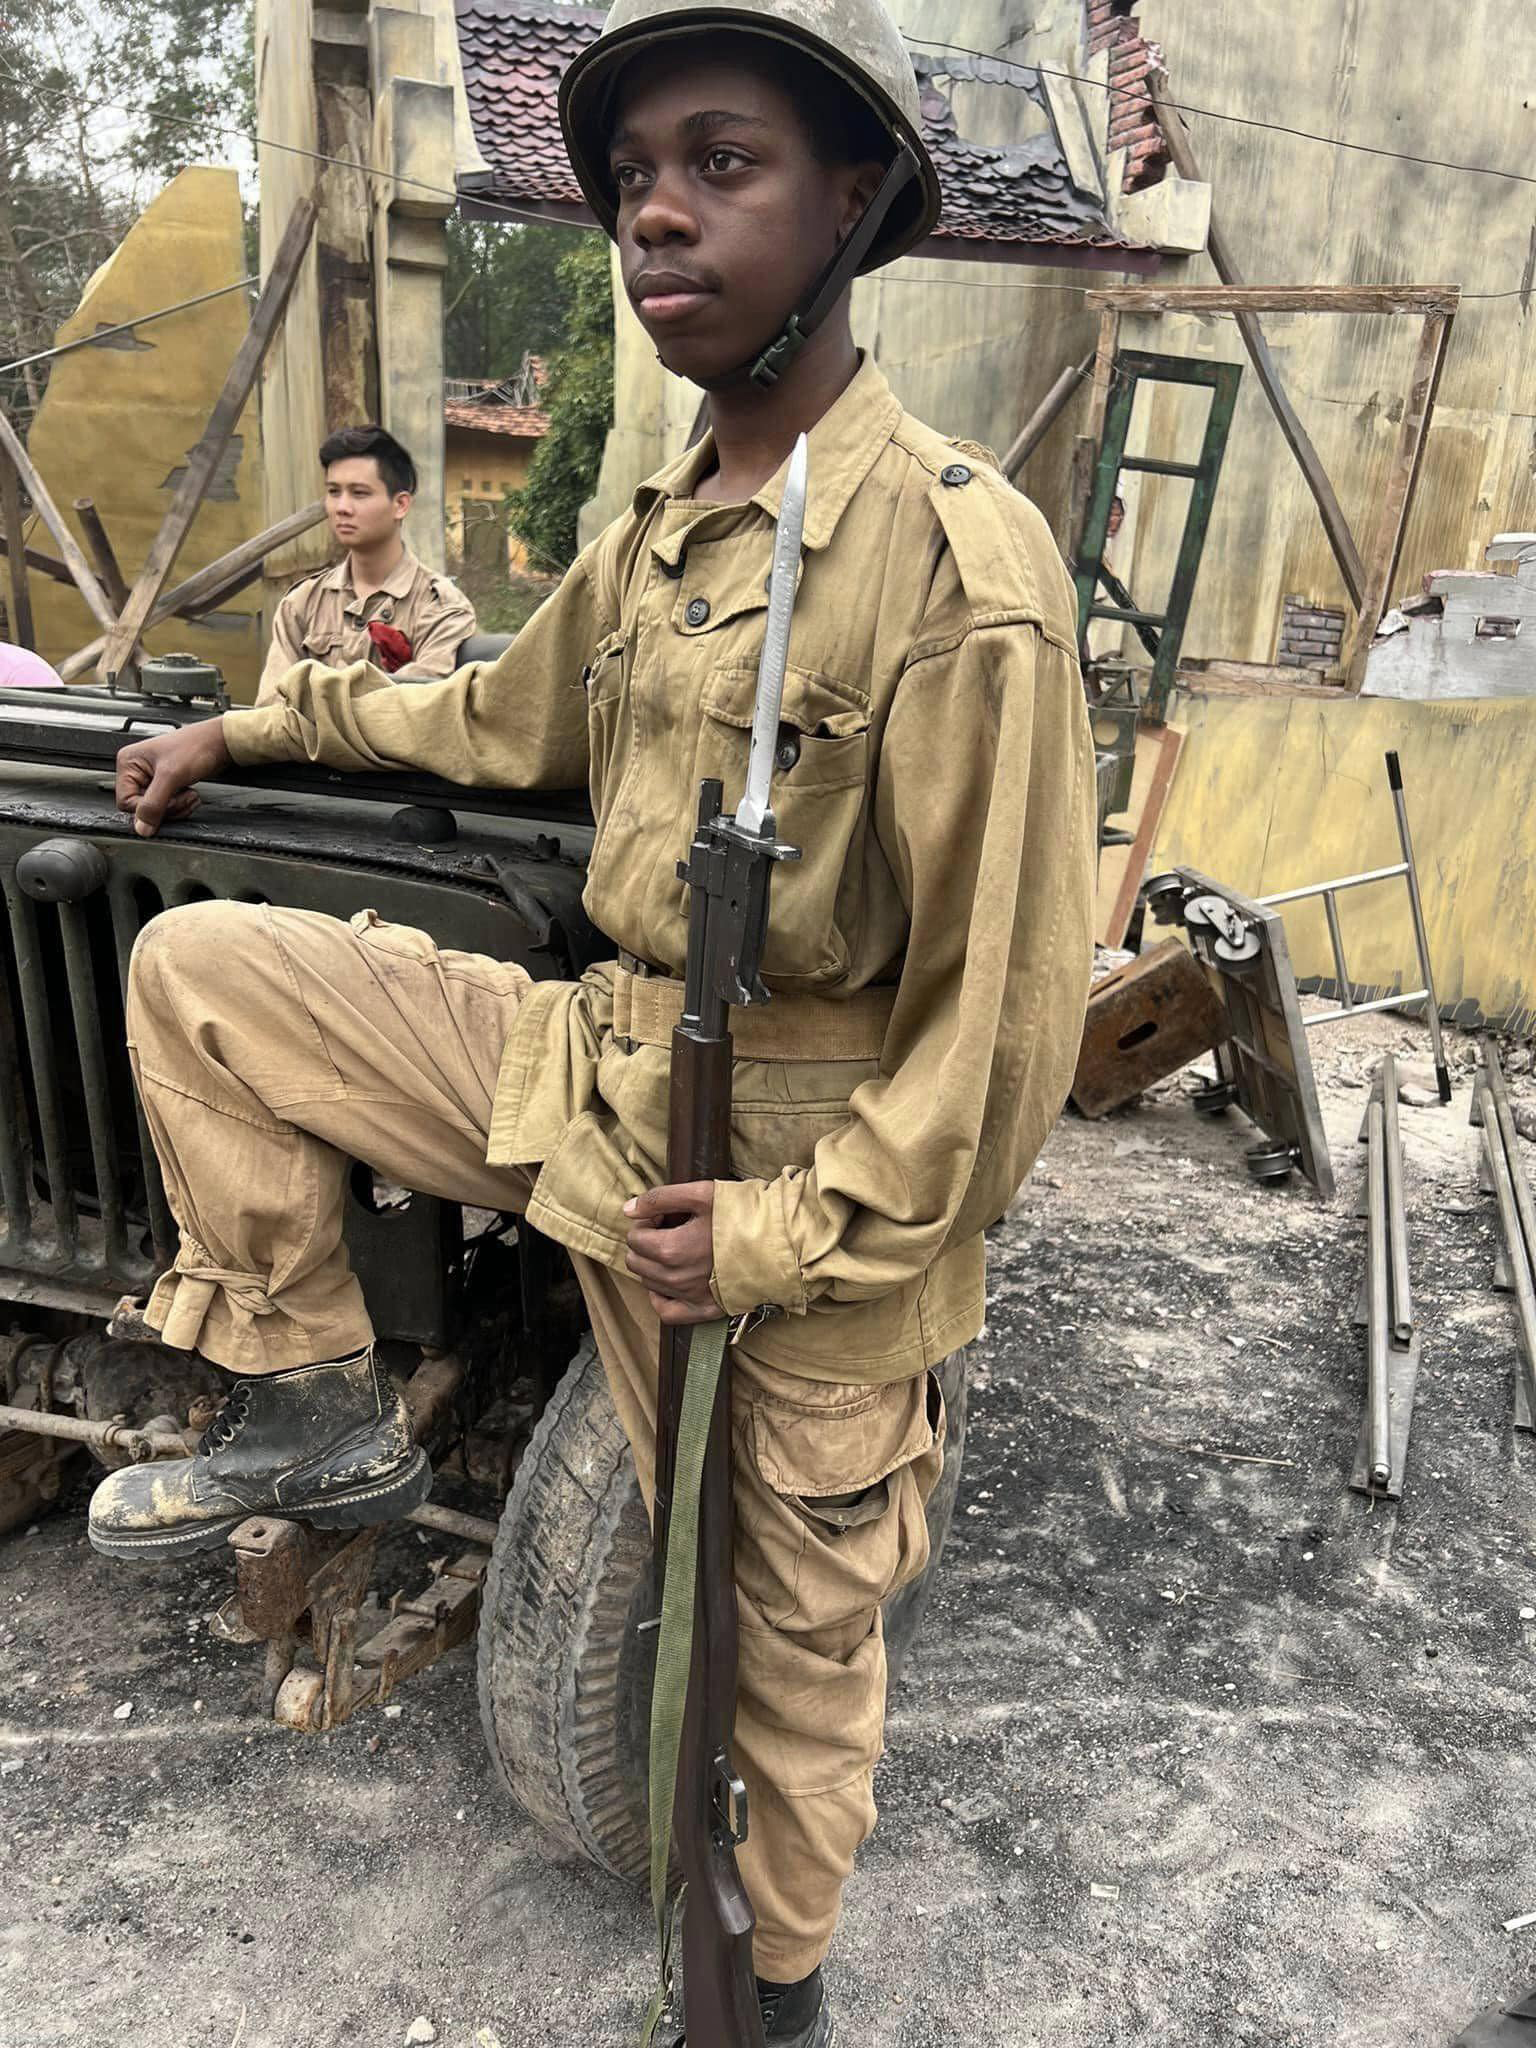 Oraiden Manuel Sabonete, quốc tịch Mozambique đóng vai lính thực dân trong phim.